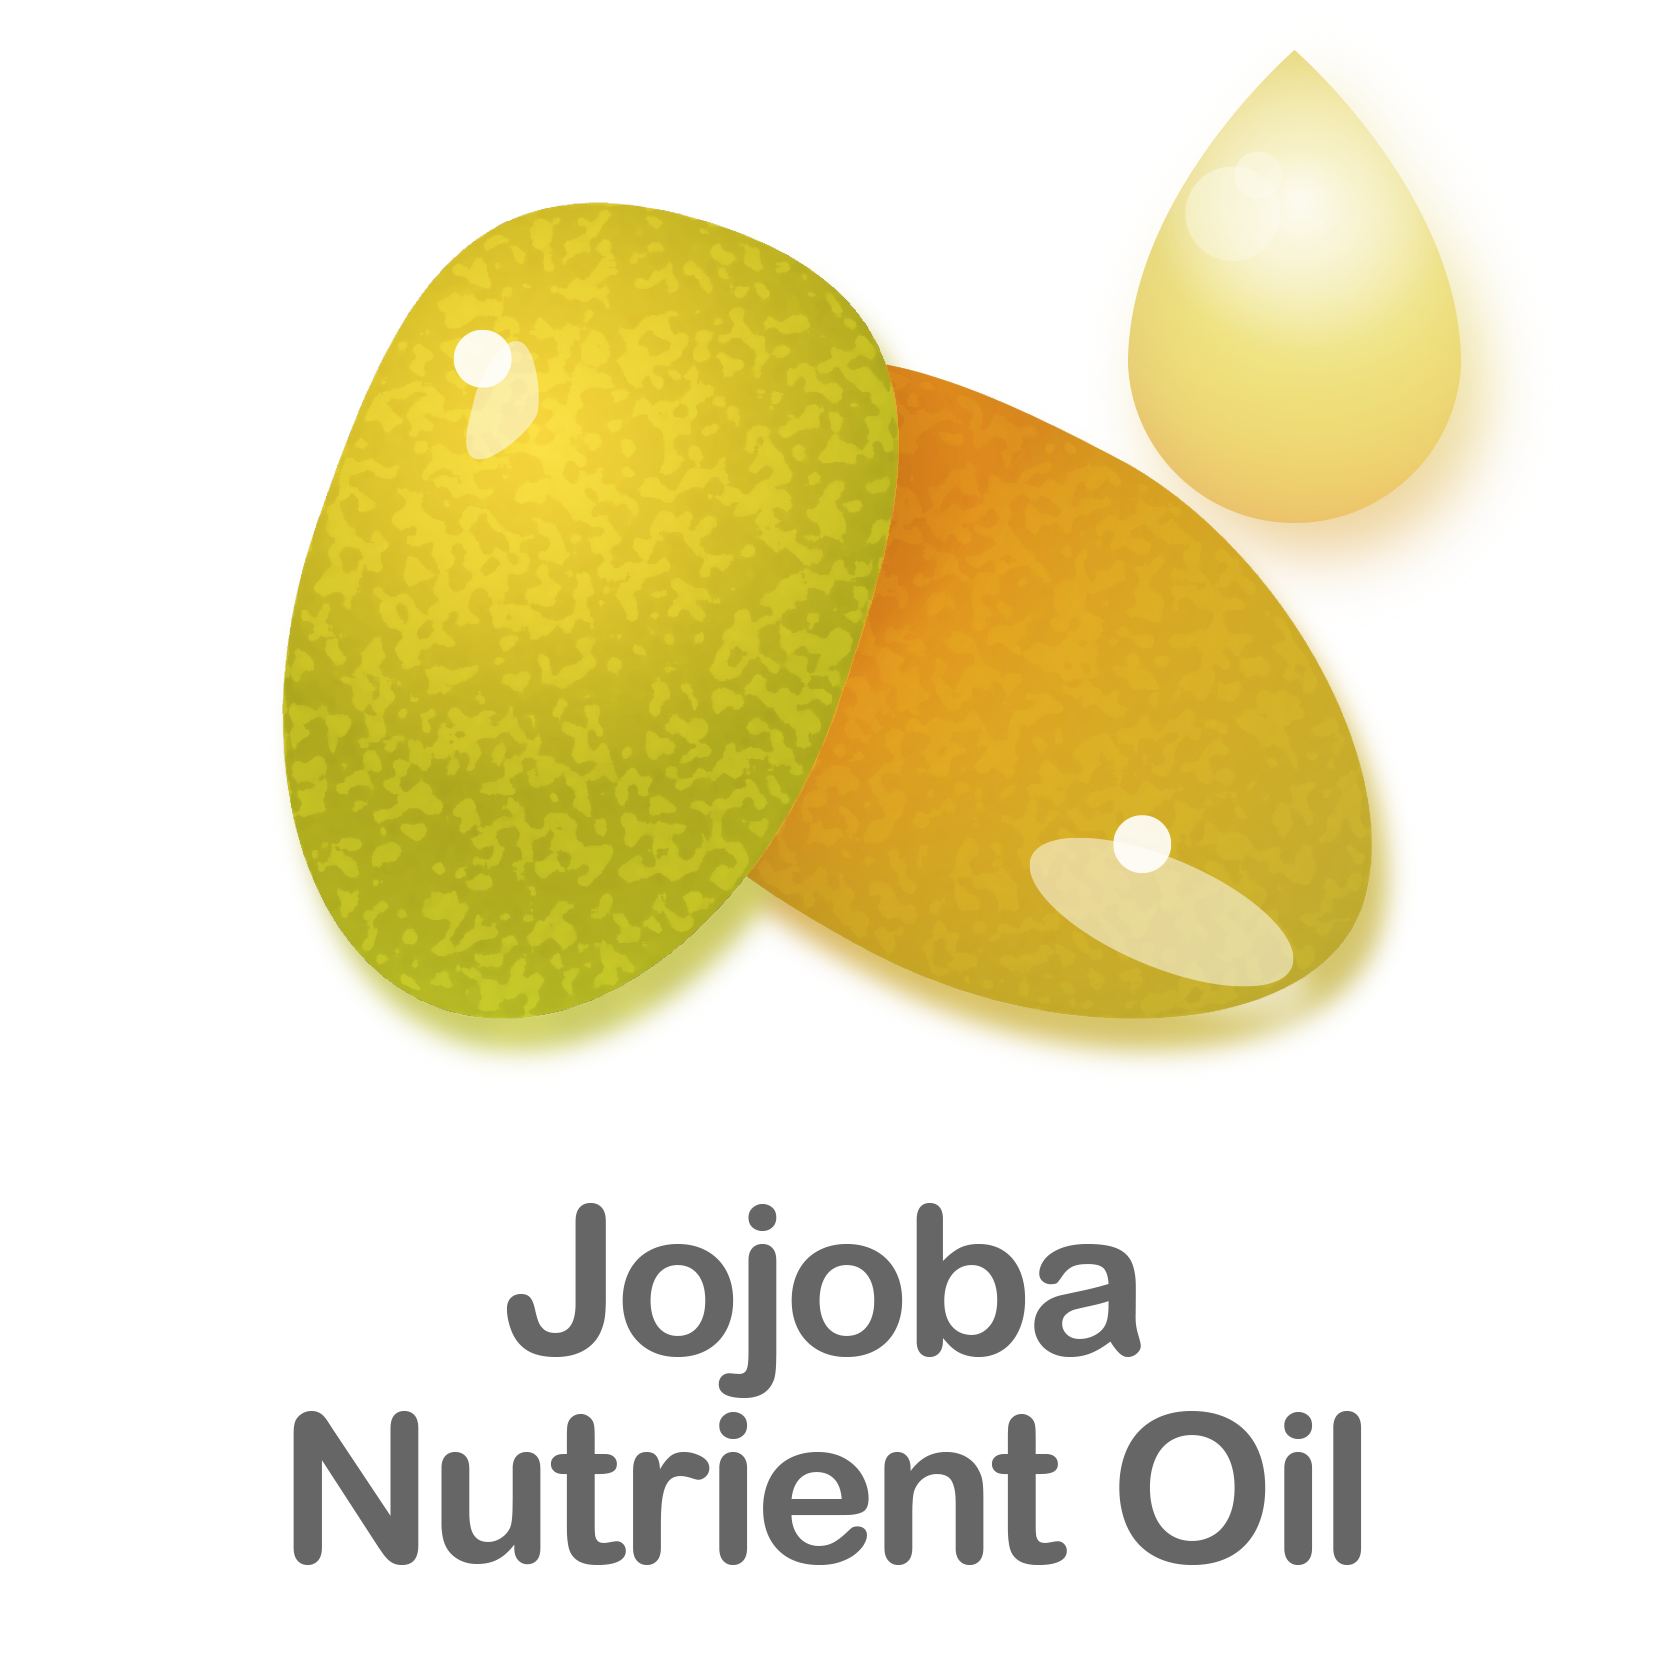 Jojoba Nutrient Oil